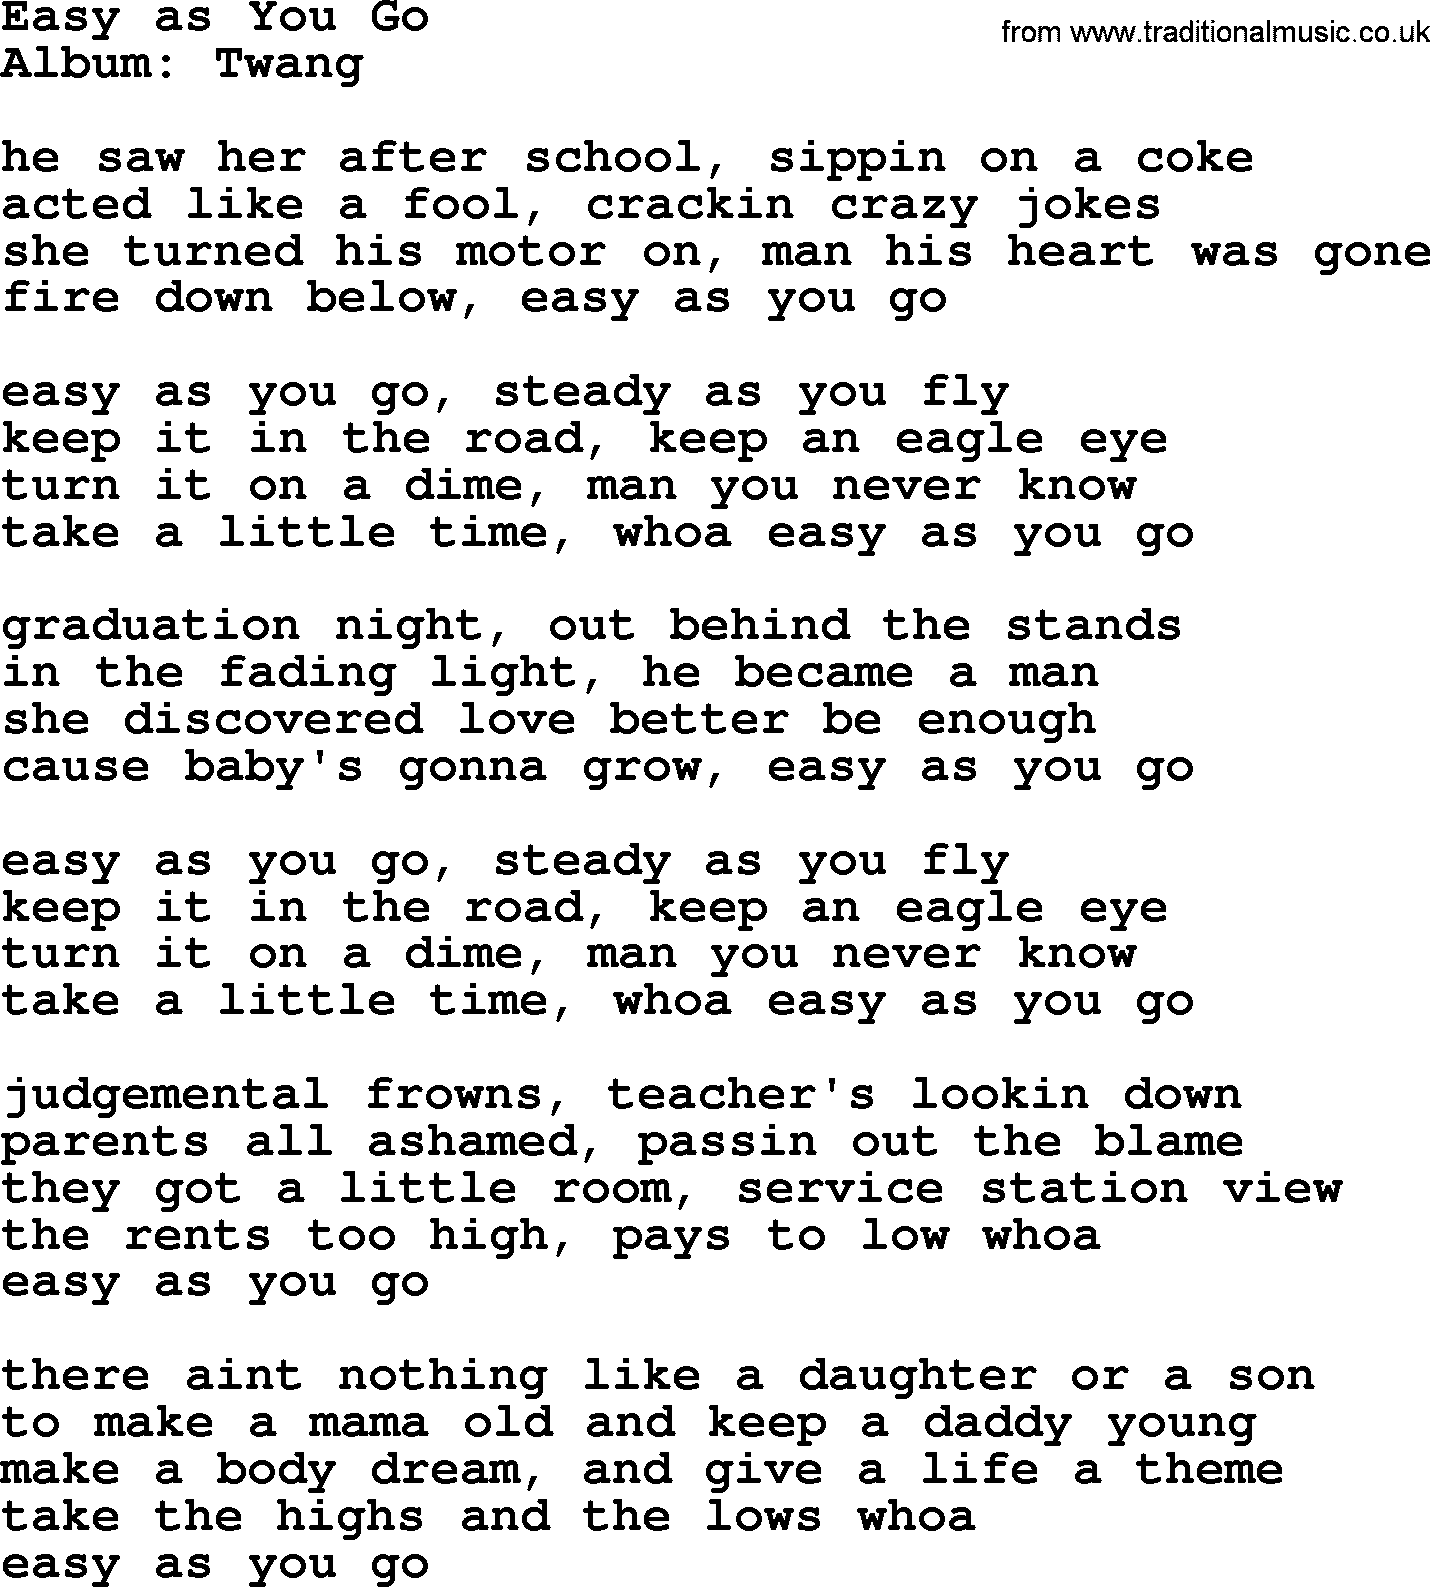 George Strait song: Easy as You Go, lyrics